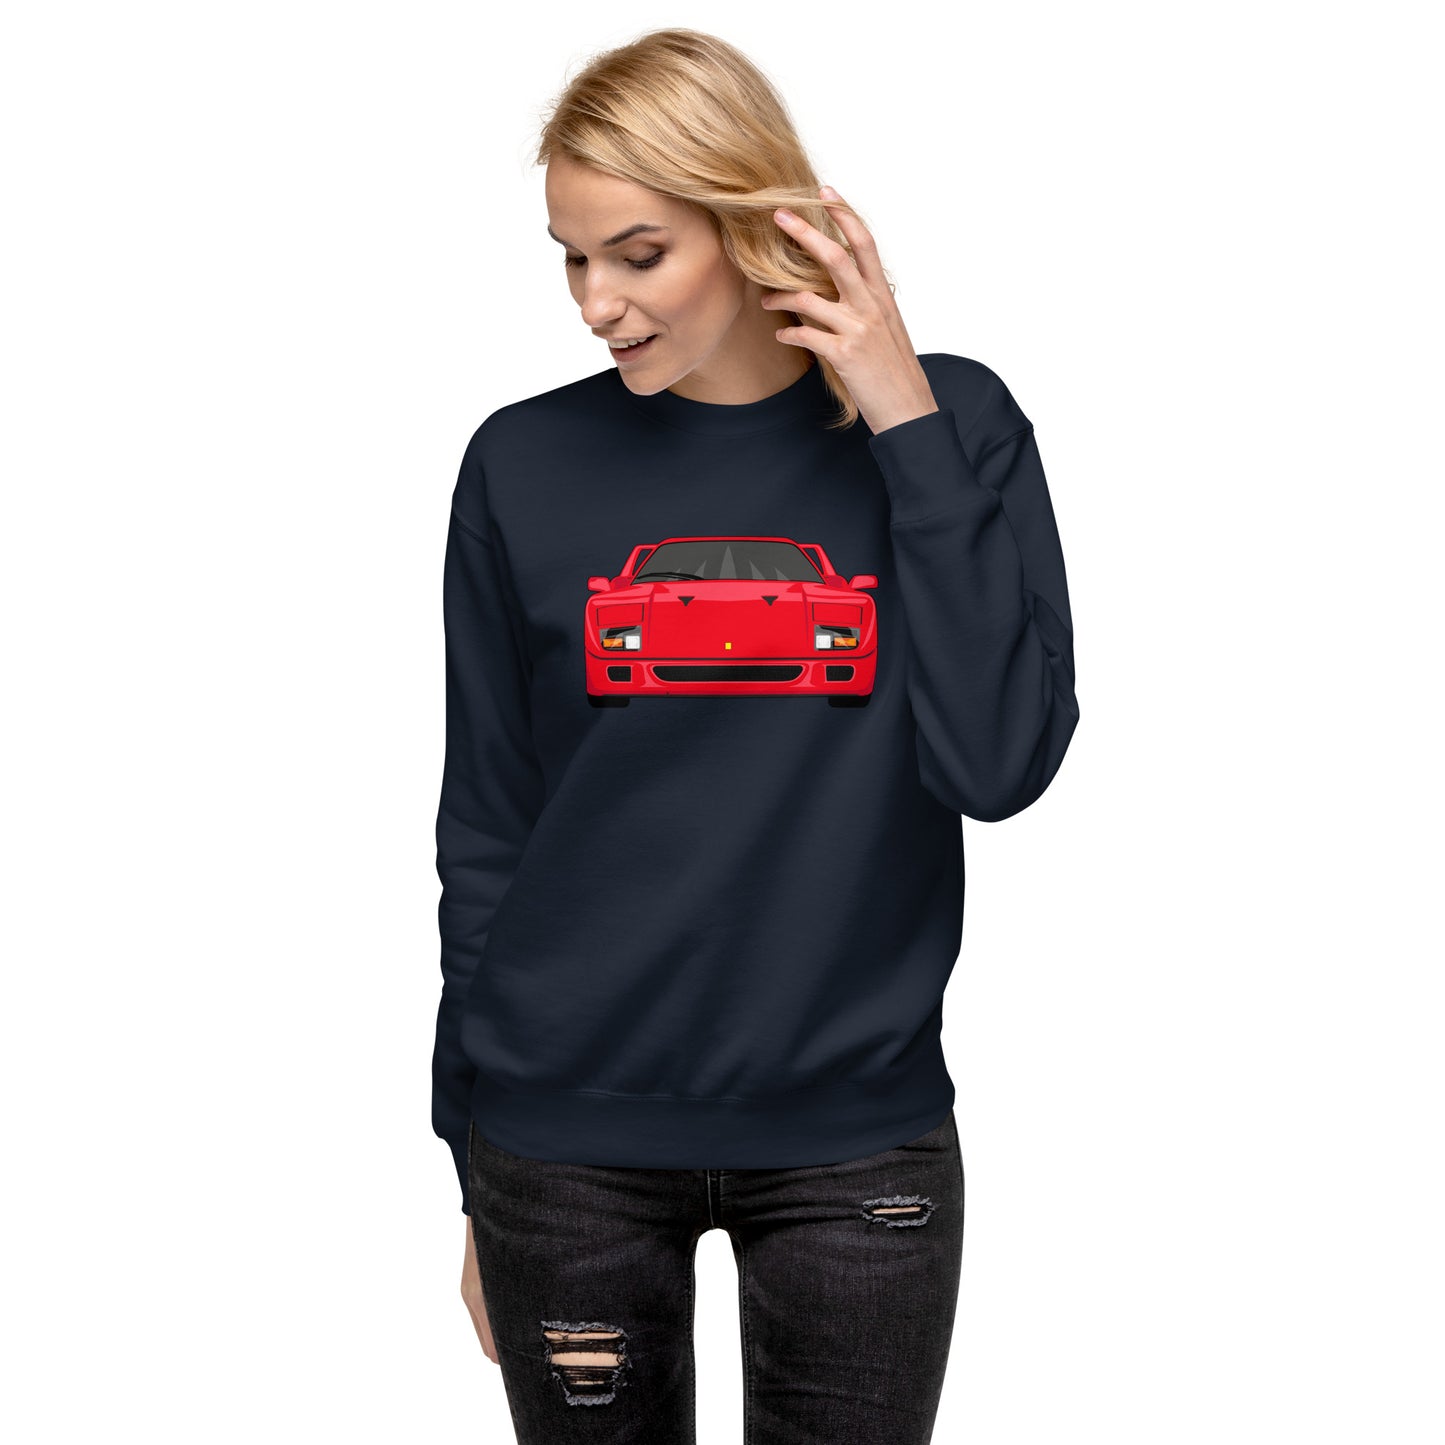 Ferrari F40 "Garage Days" 1 of 100 Unisex Sweatshirt